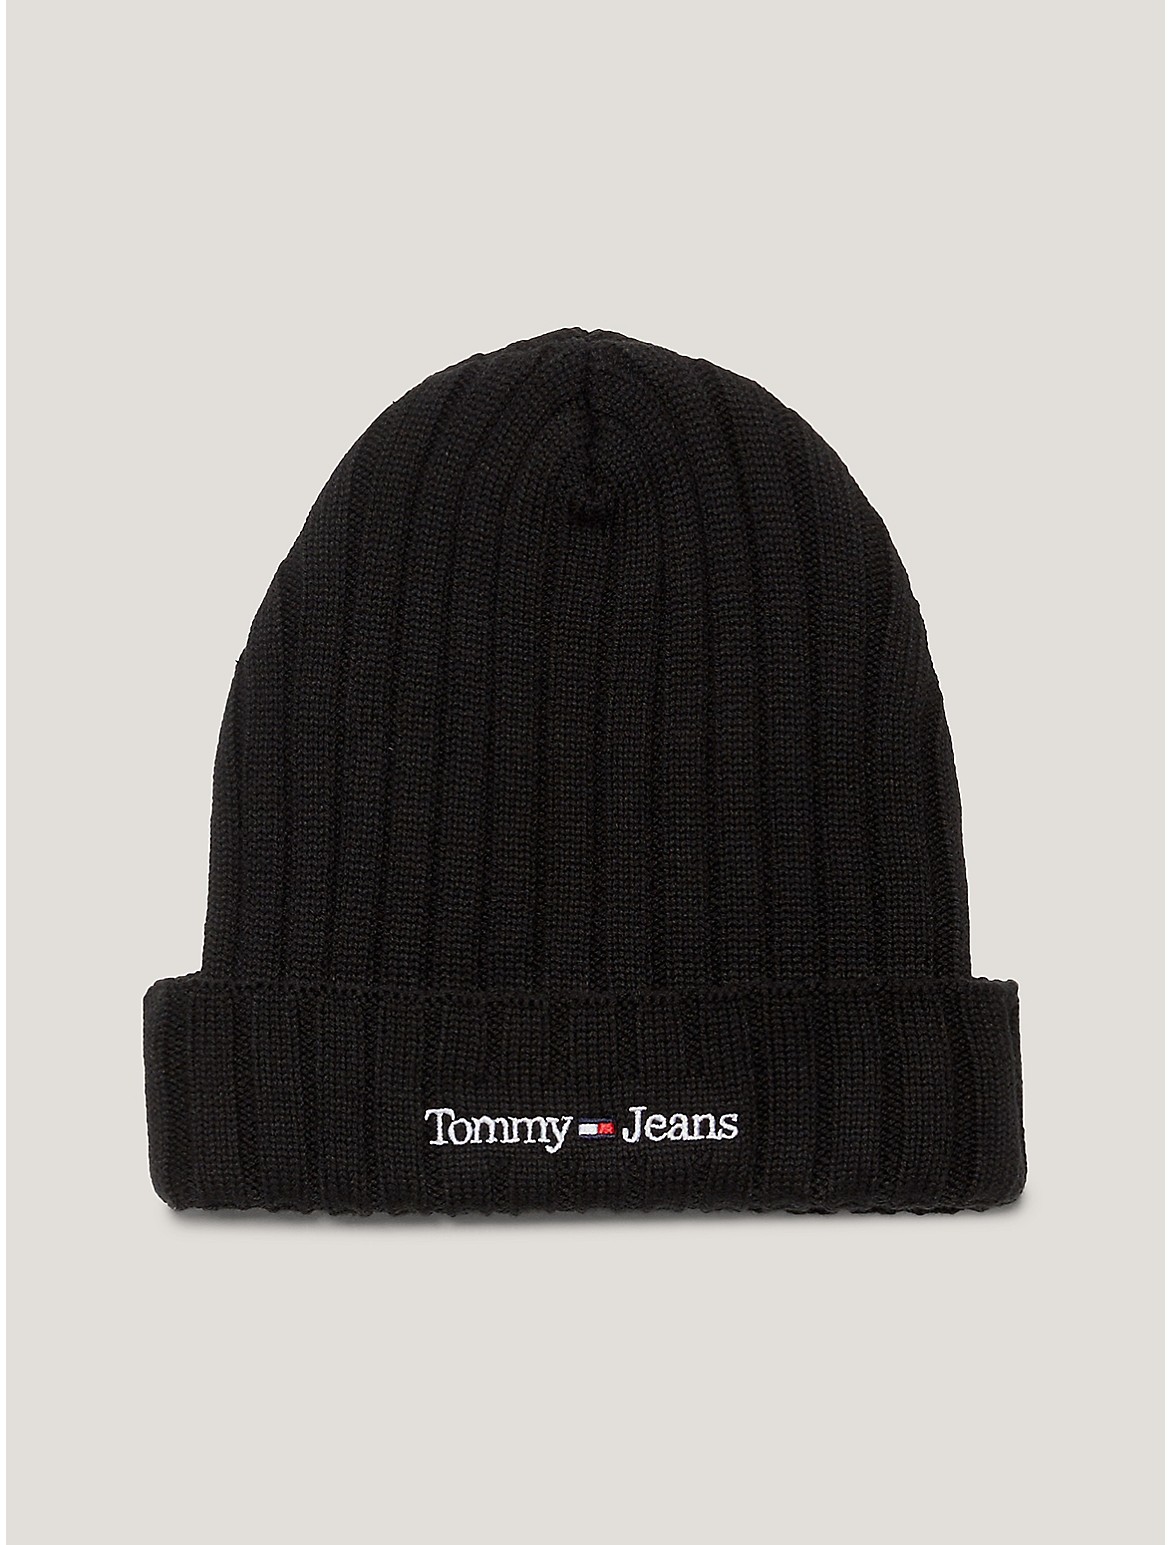 Tommy Hilfiger Men's Tommy Jeans Logo Long Beanie - Black